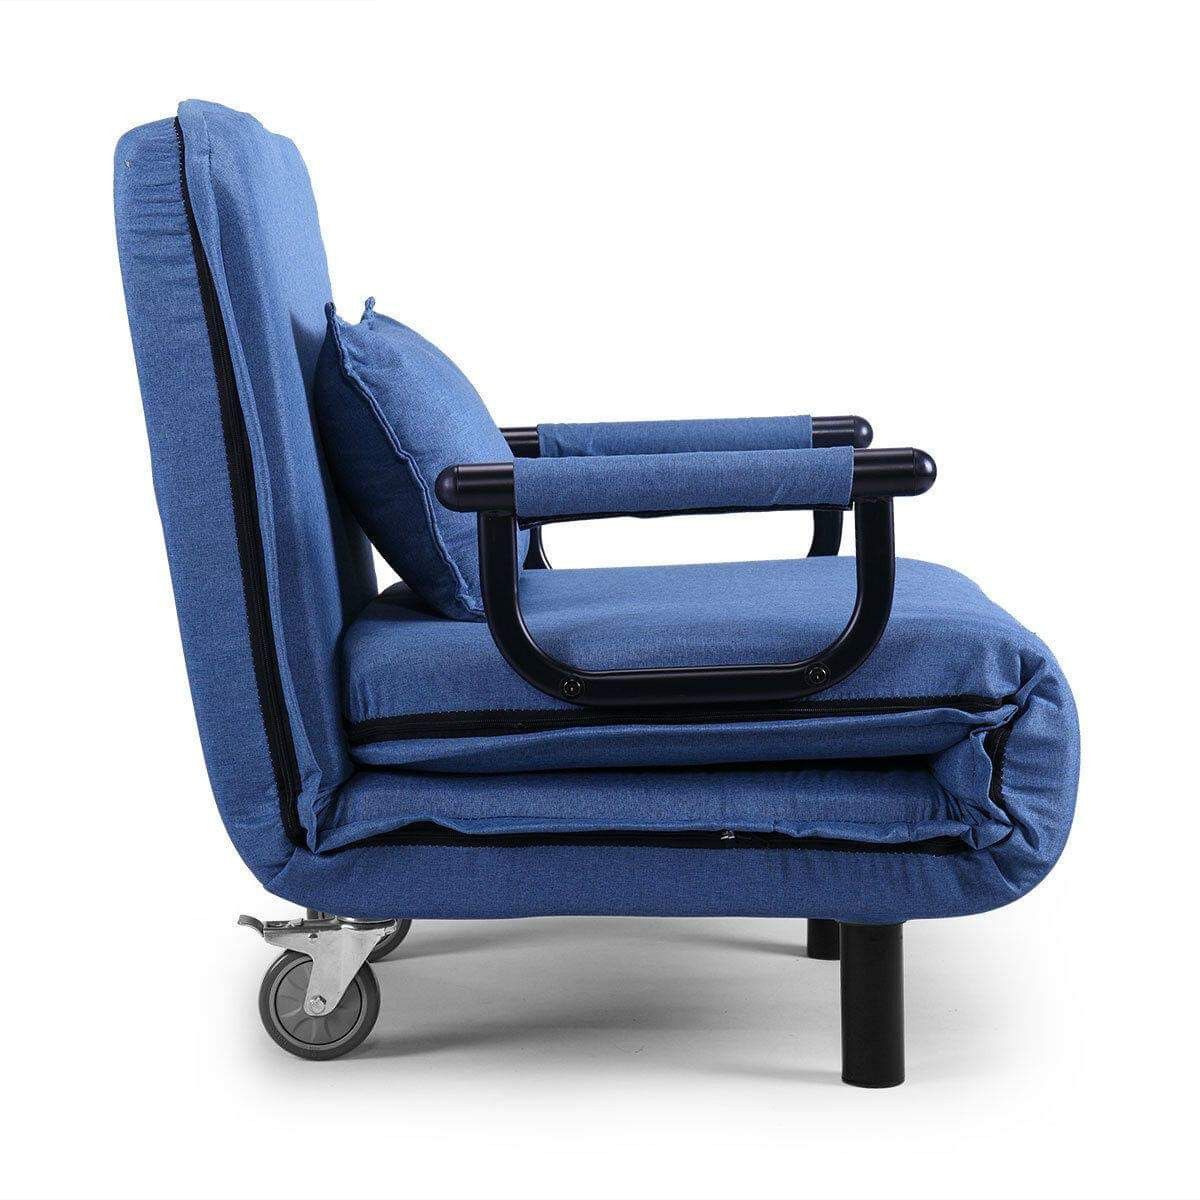 NEW Convertible Sofa Chair